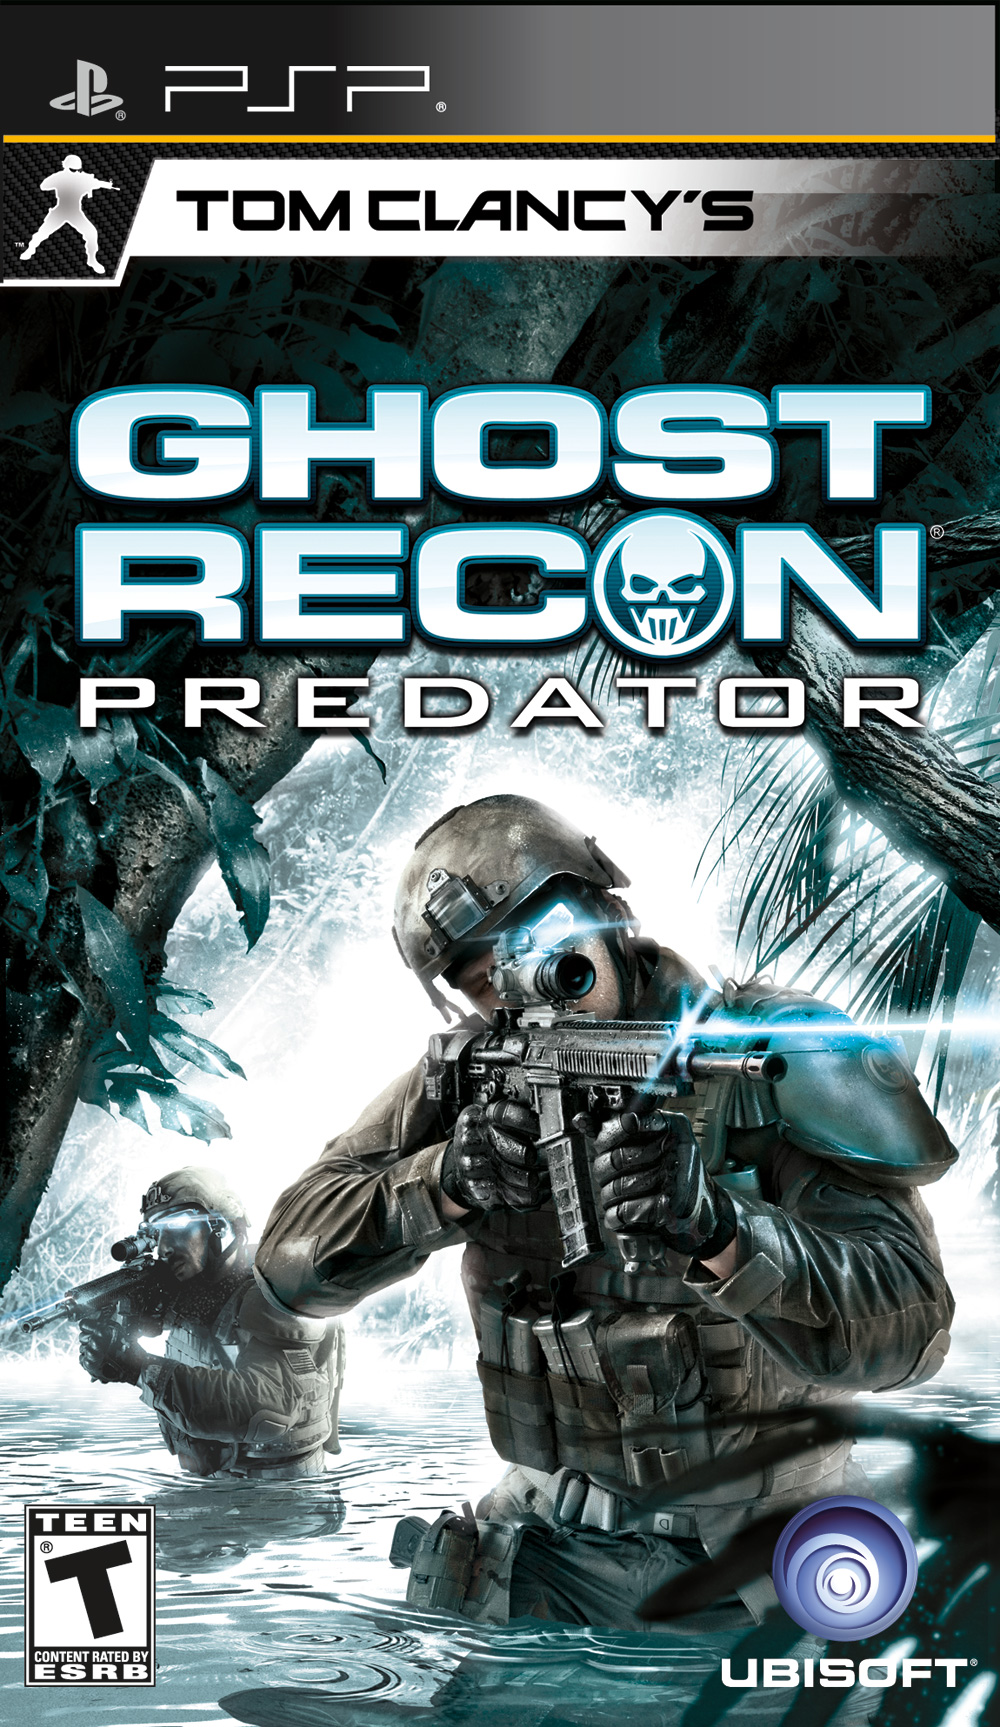 Tom Clancy's Ghost Recon: Predator Sony PSP video game